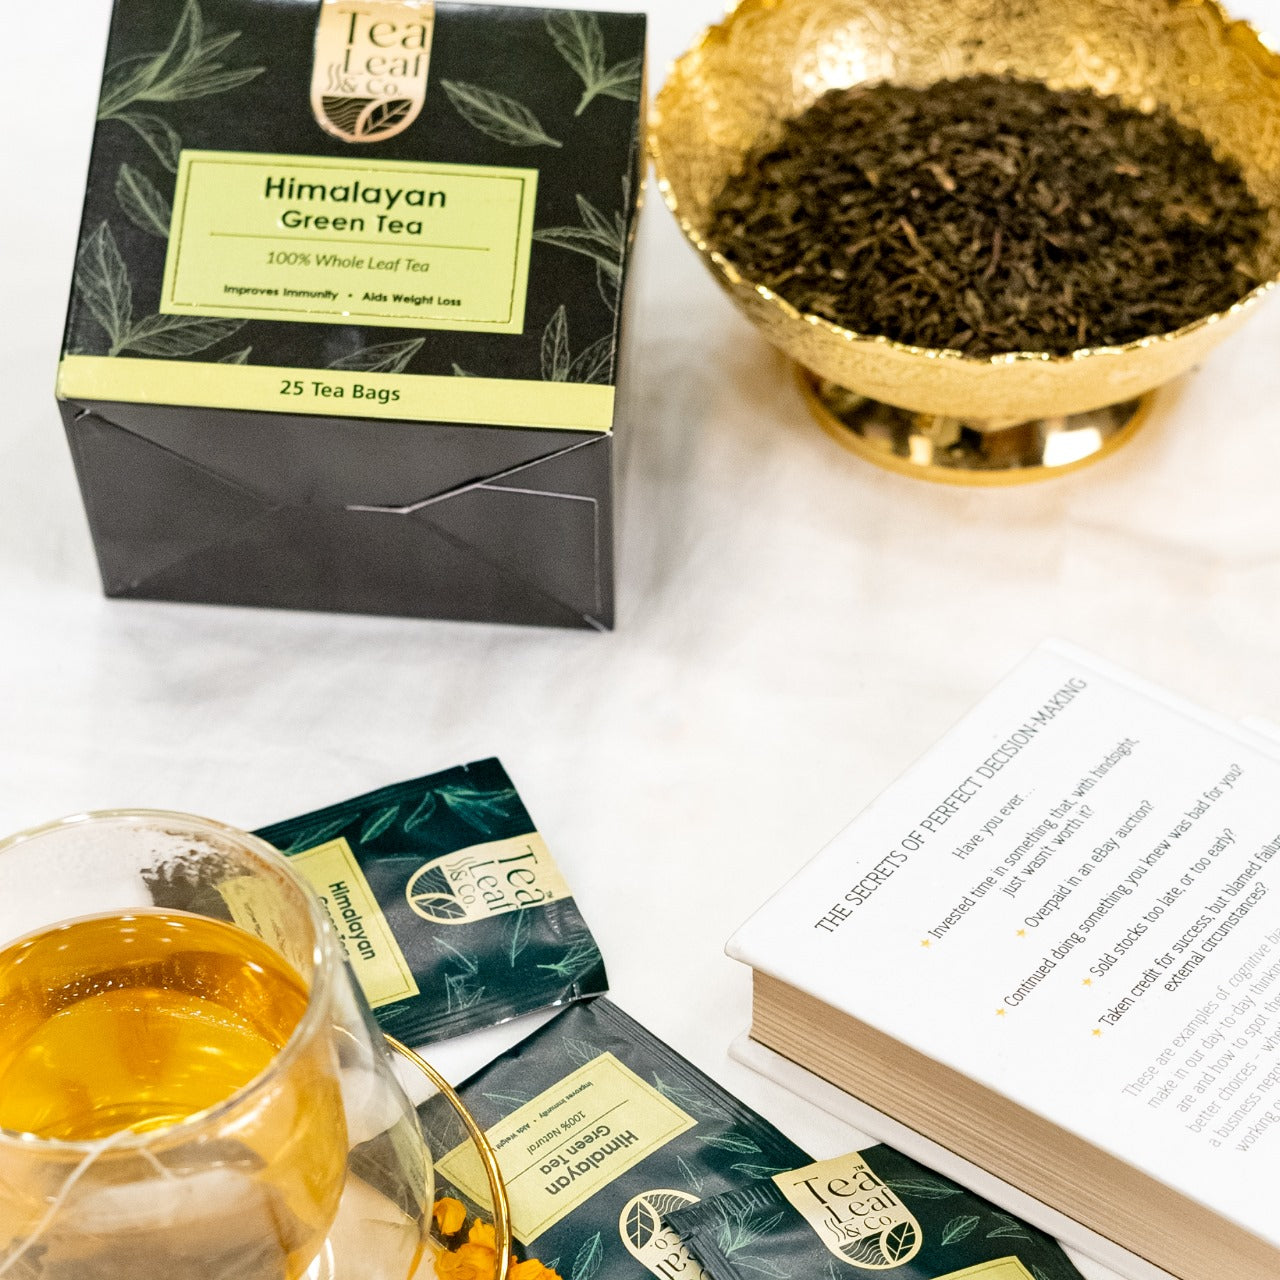 Tulsi Ashwagandha + Lemon Ginger + Himalayan Green Tea (Pack of 3) - 75 Tea Bags